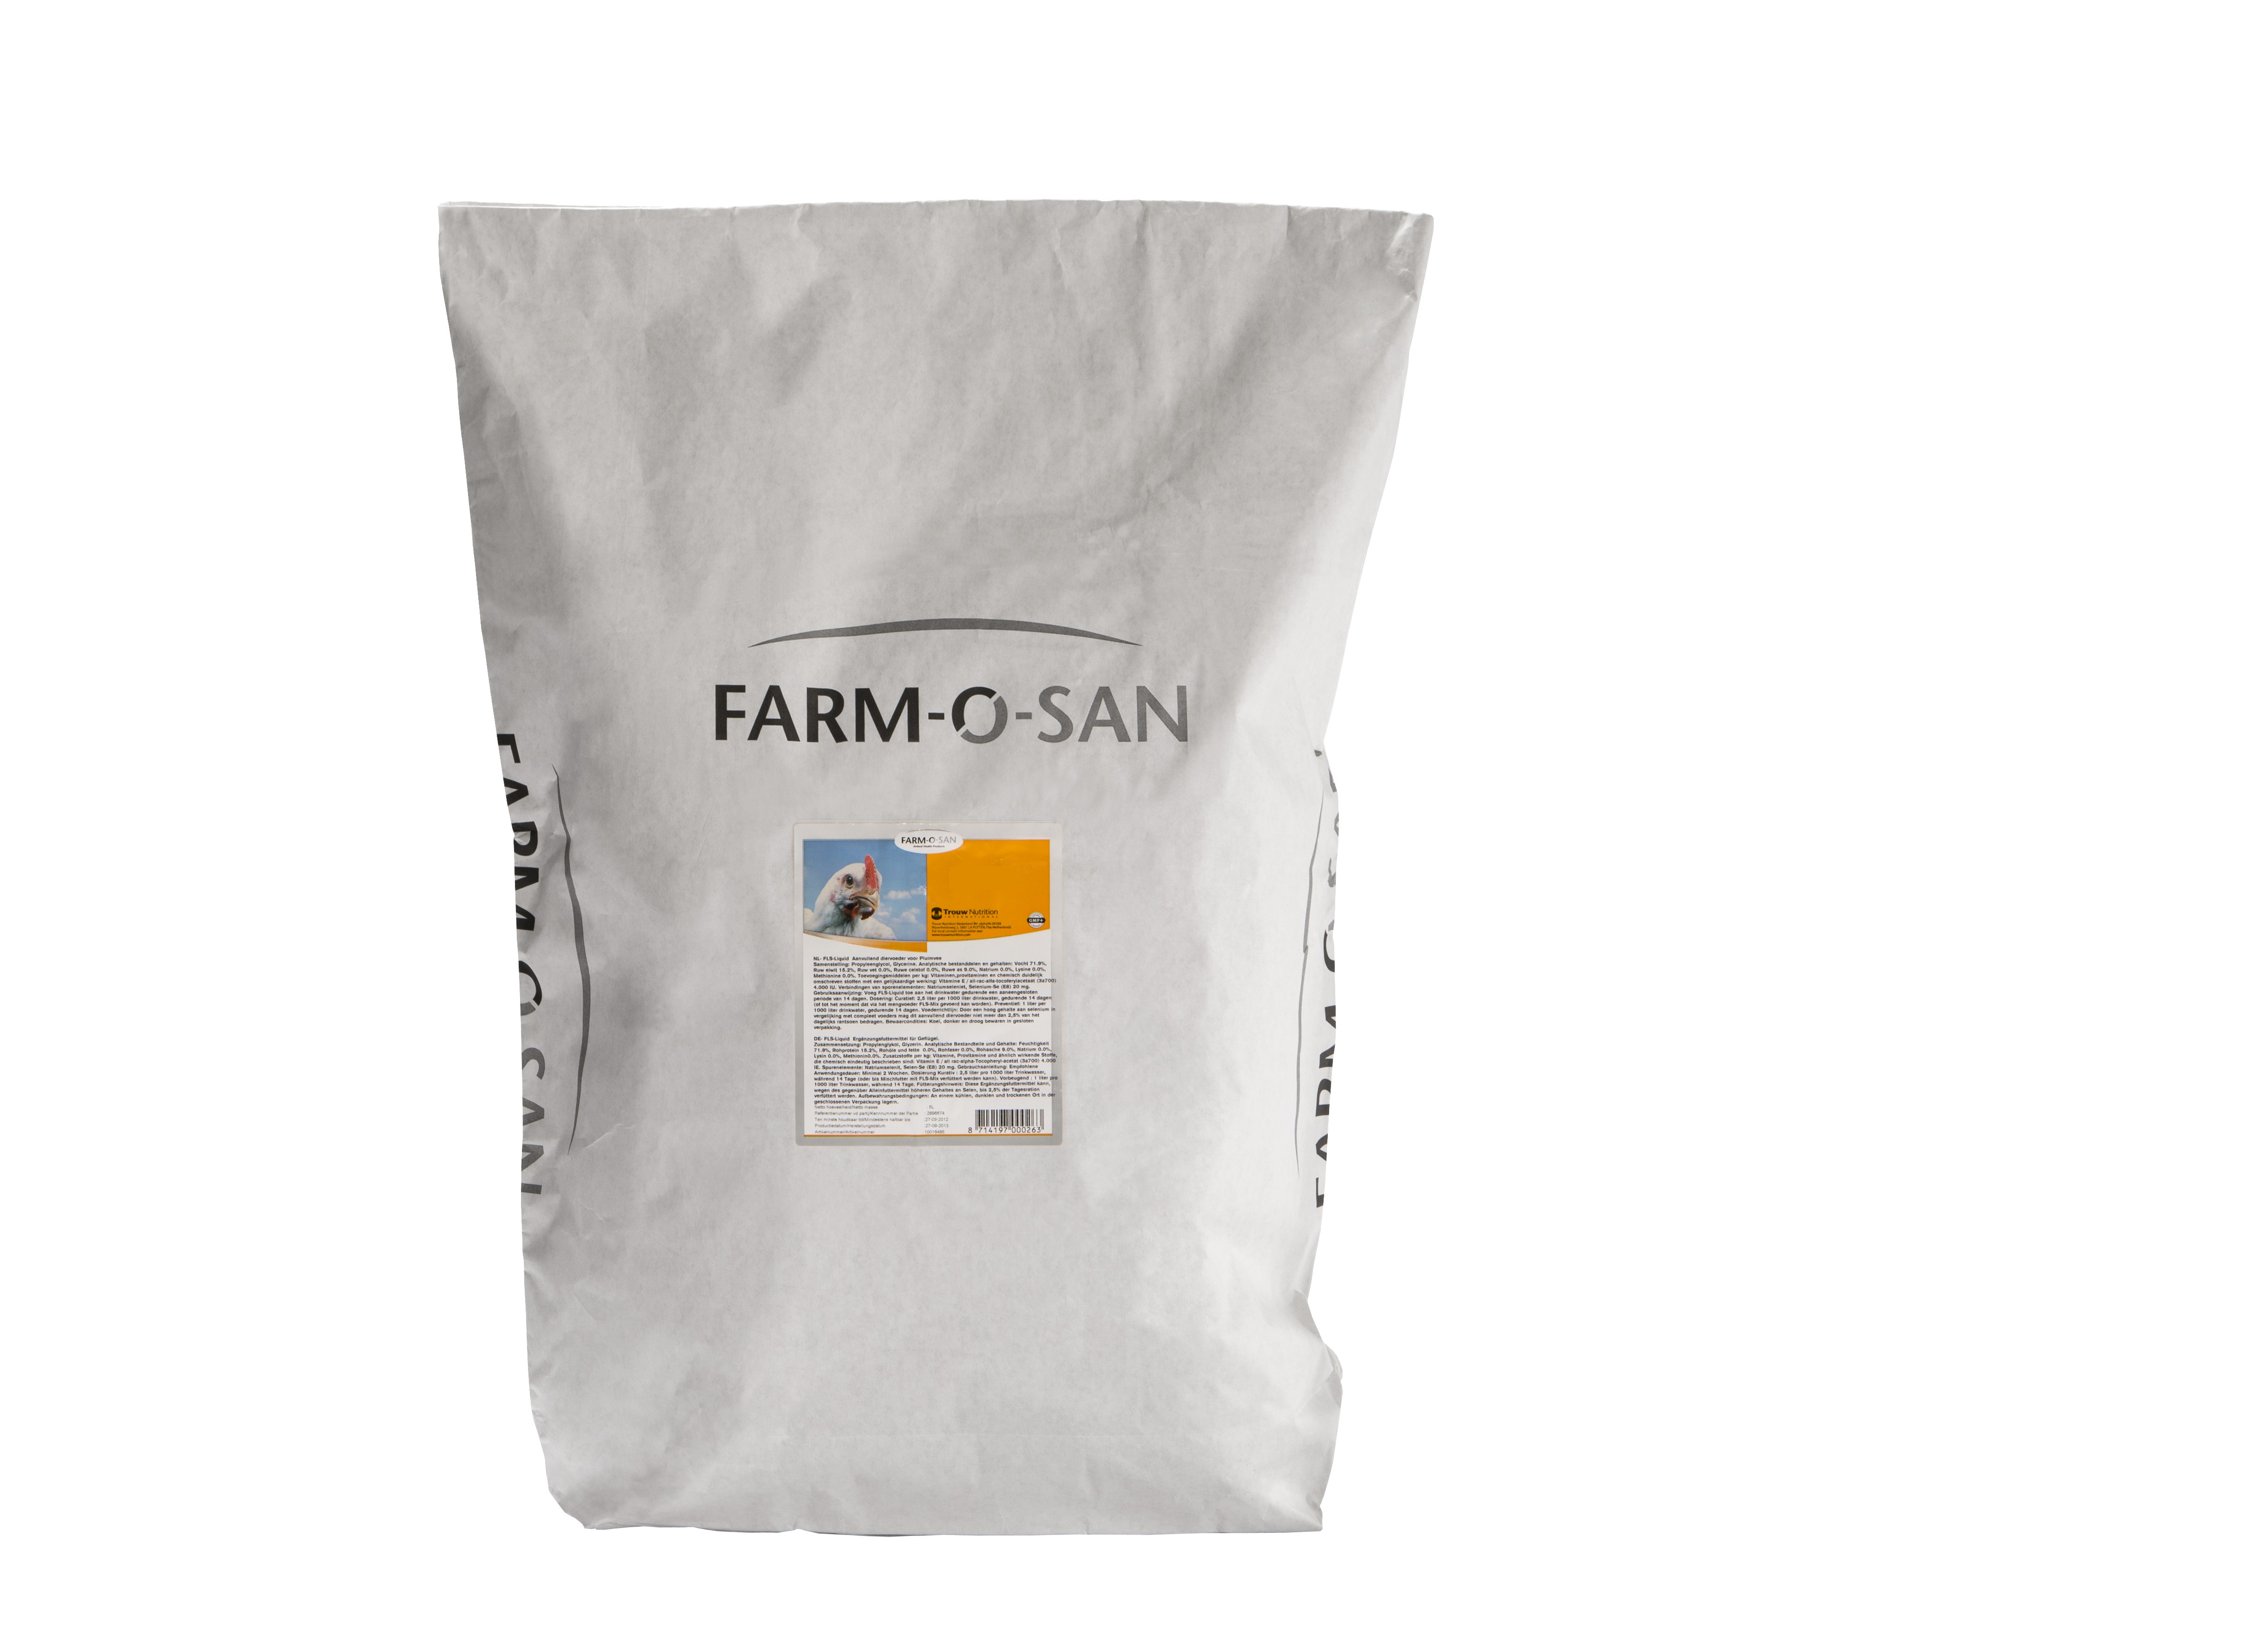 FARM-O-SAN Shellboost 25 kg- zur Verbesserung der Eierschalen